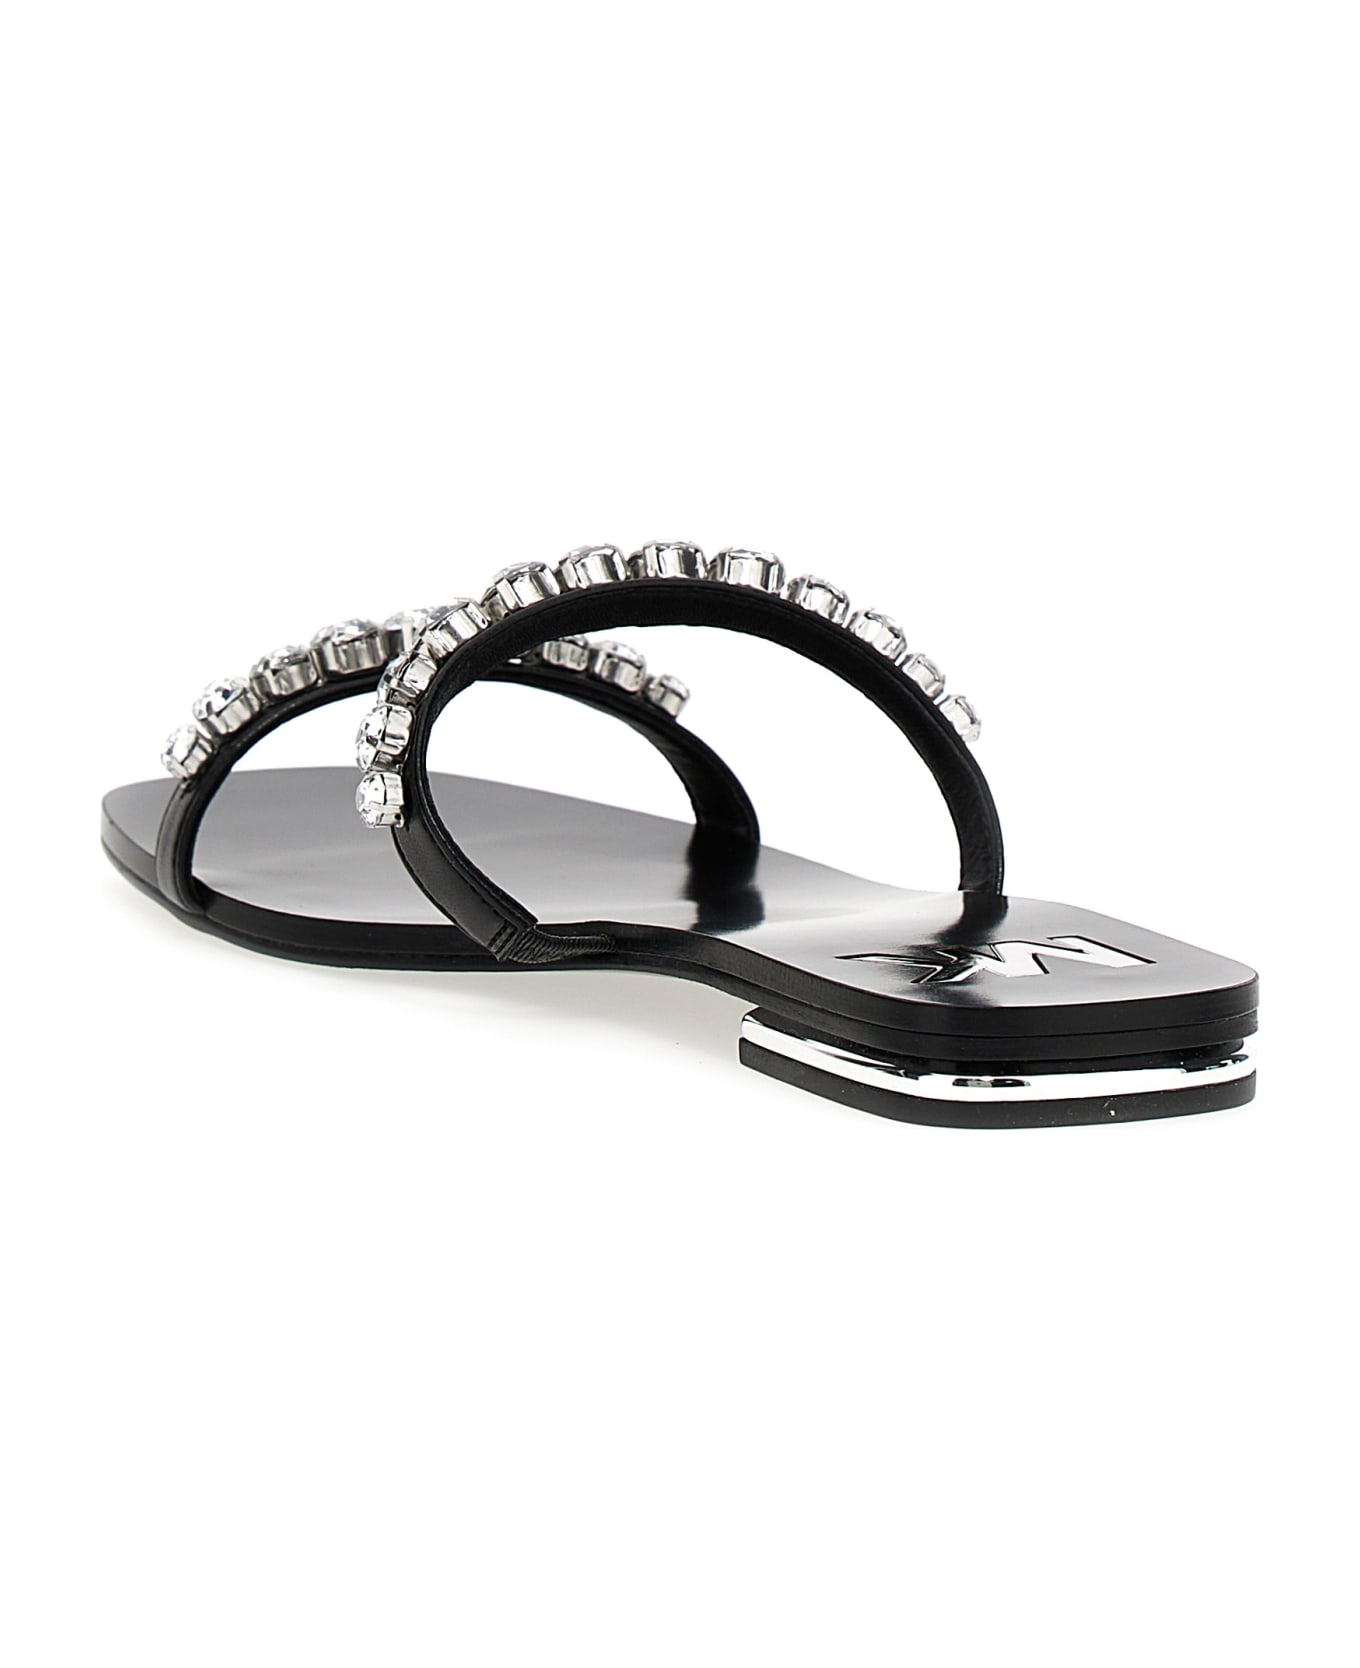 Michael Kors Jessa' Leather Sandals - Black